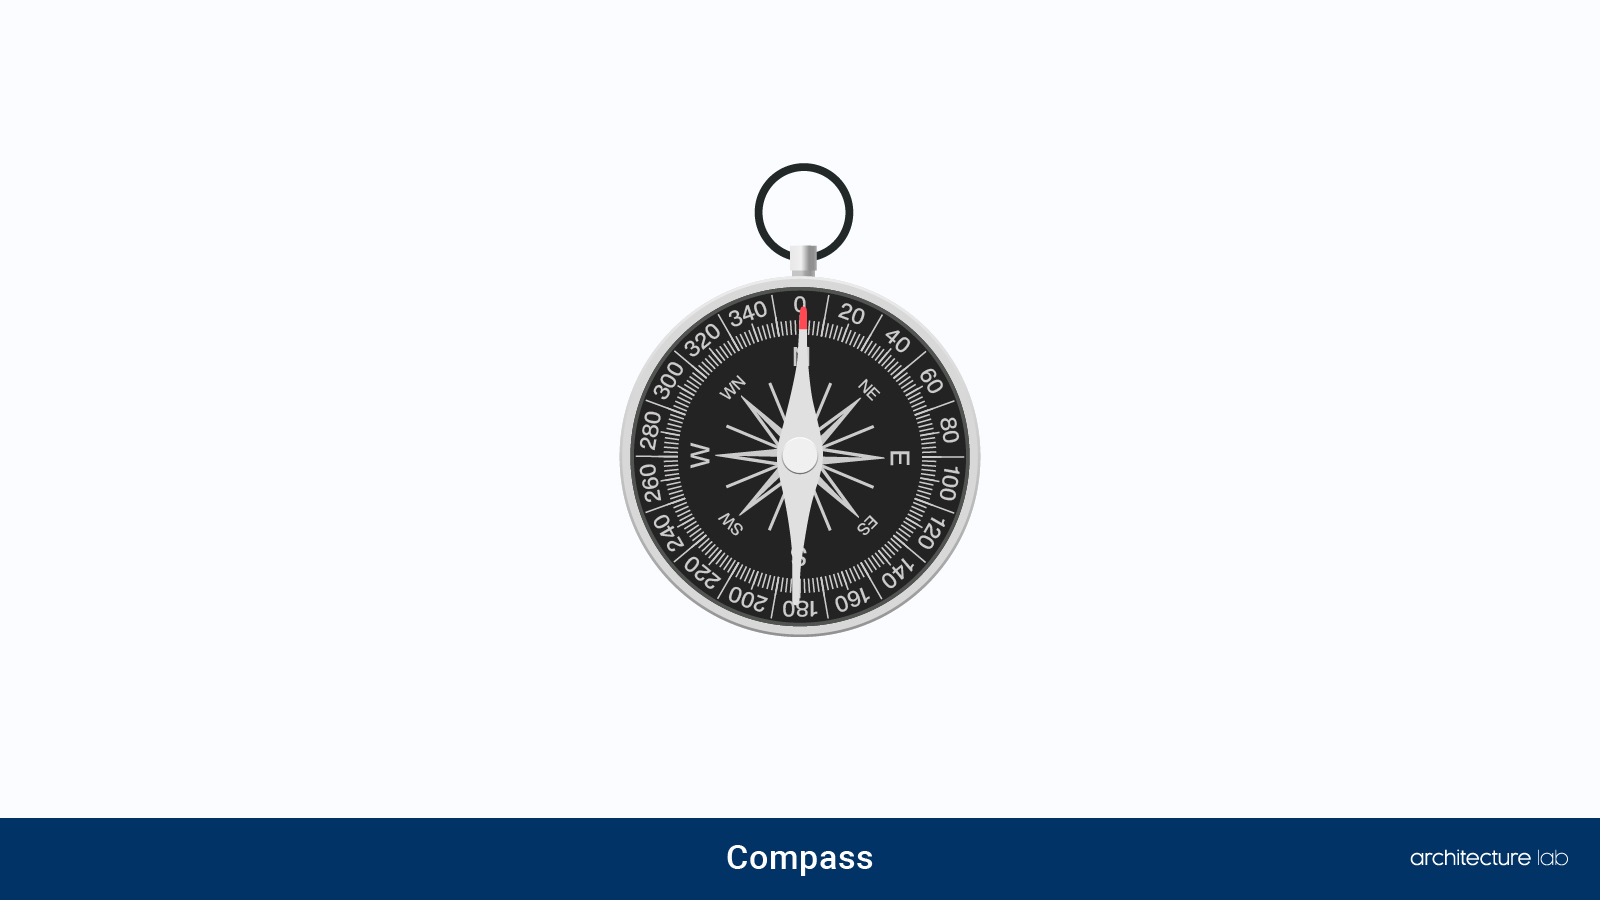 12. Compass